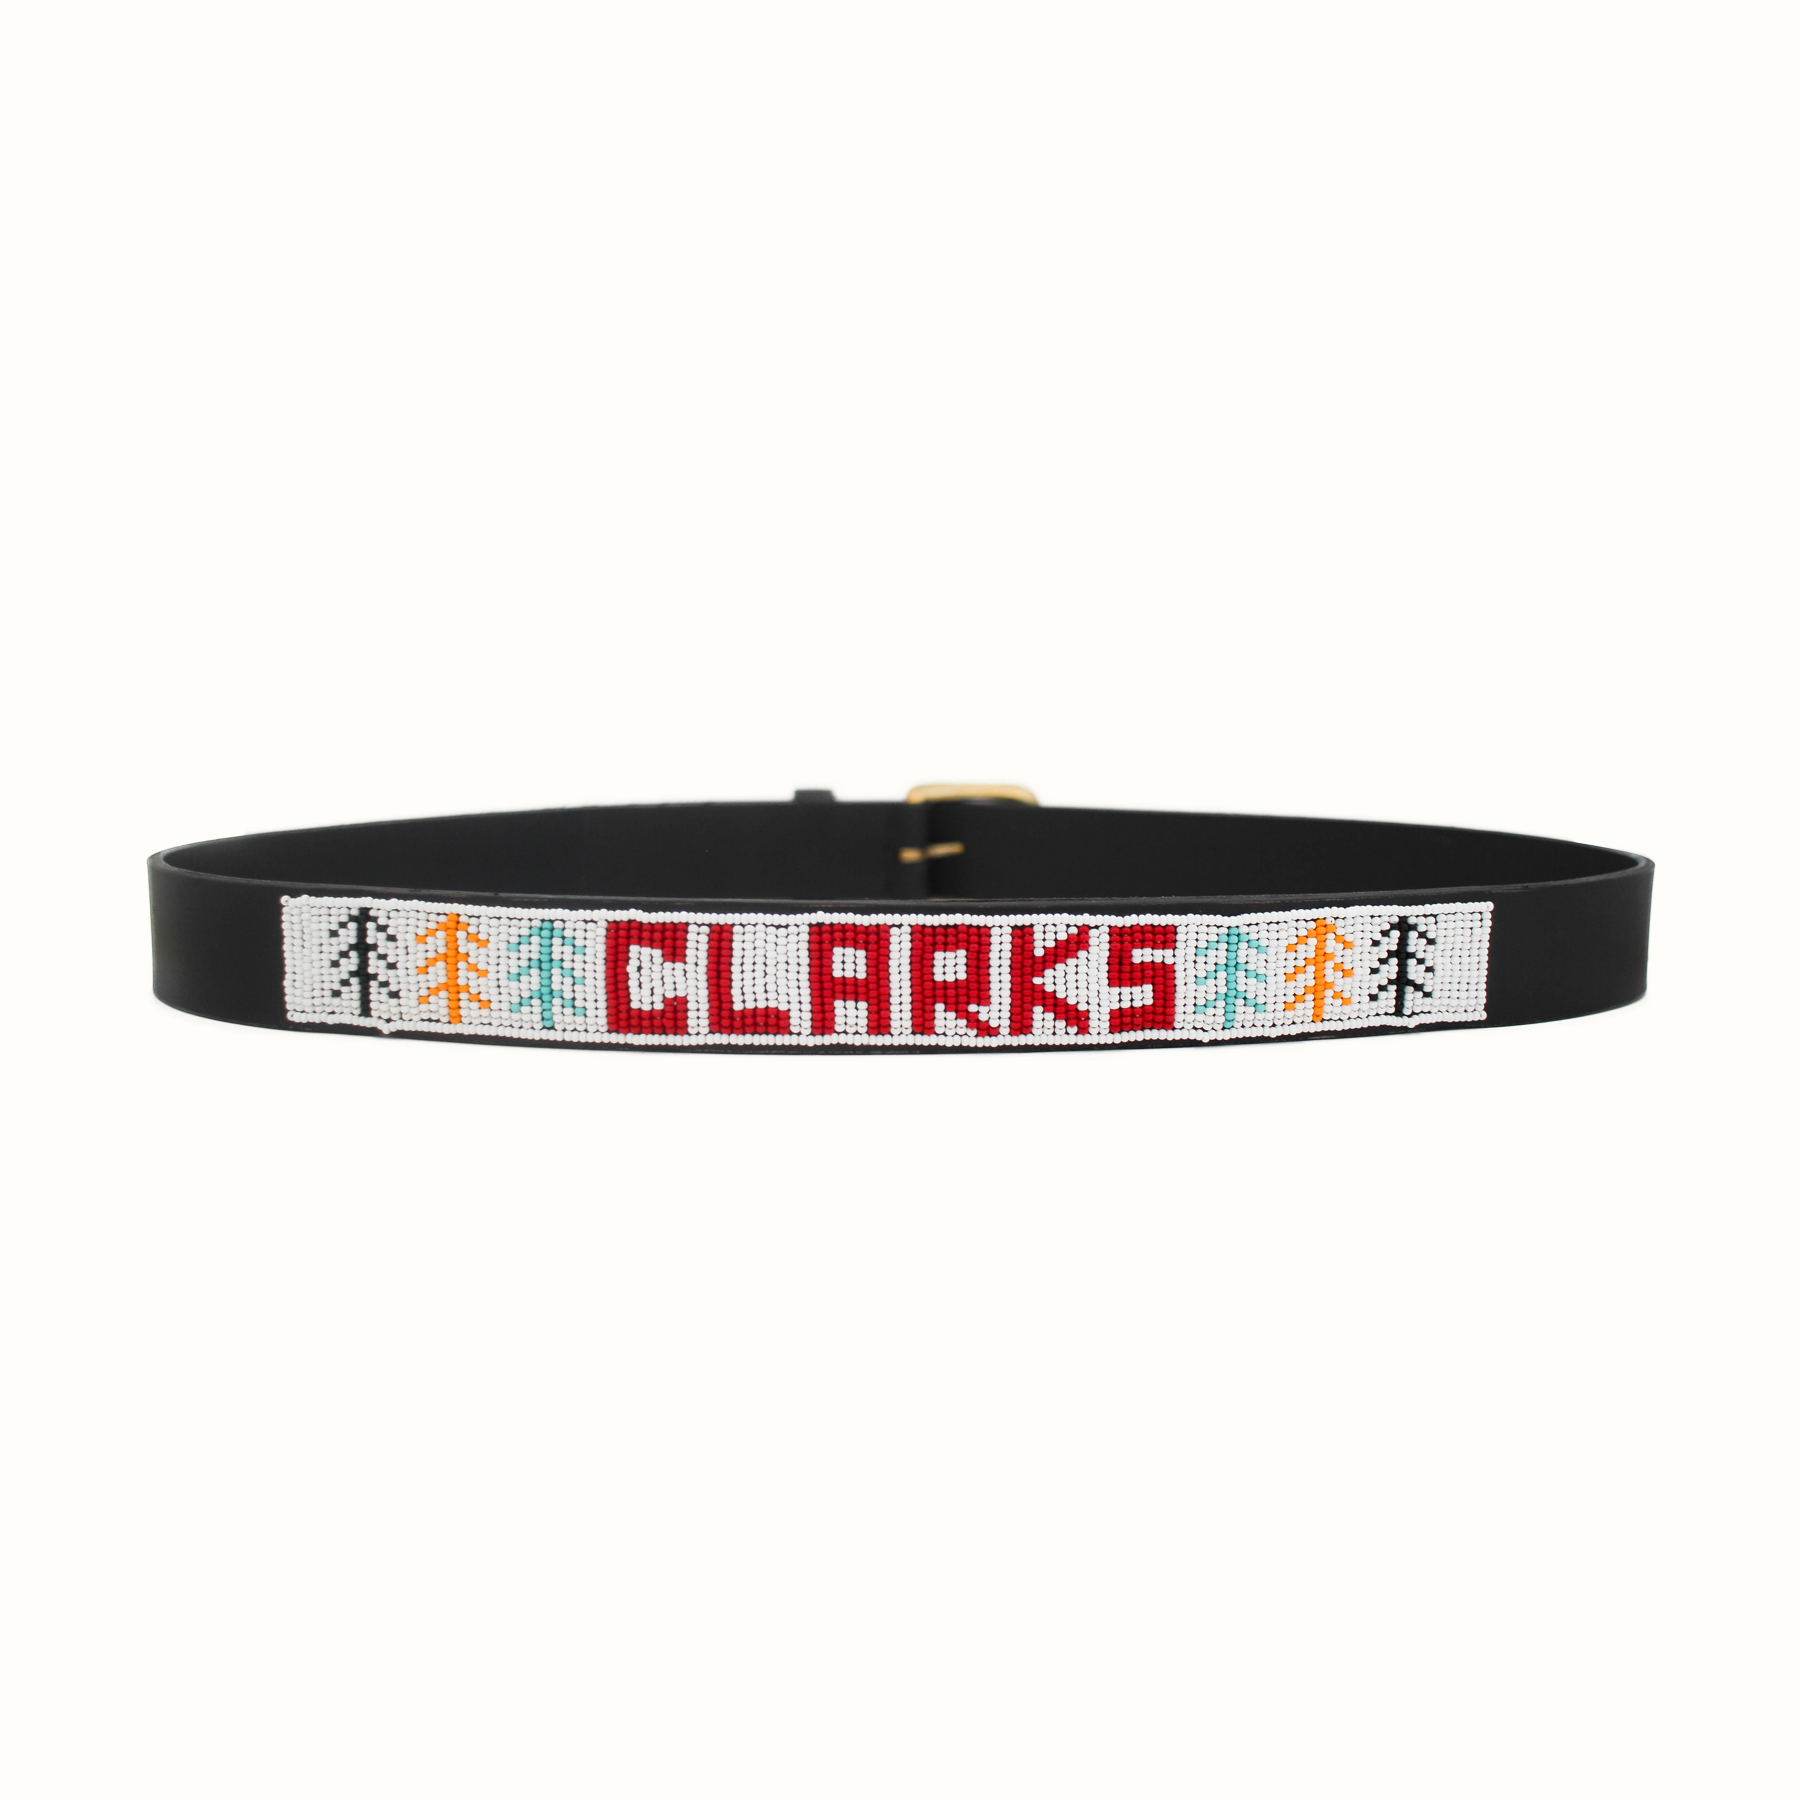 clarks belt